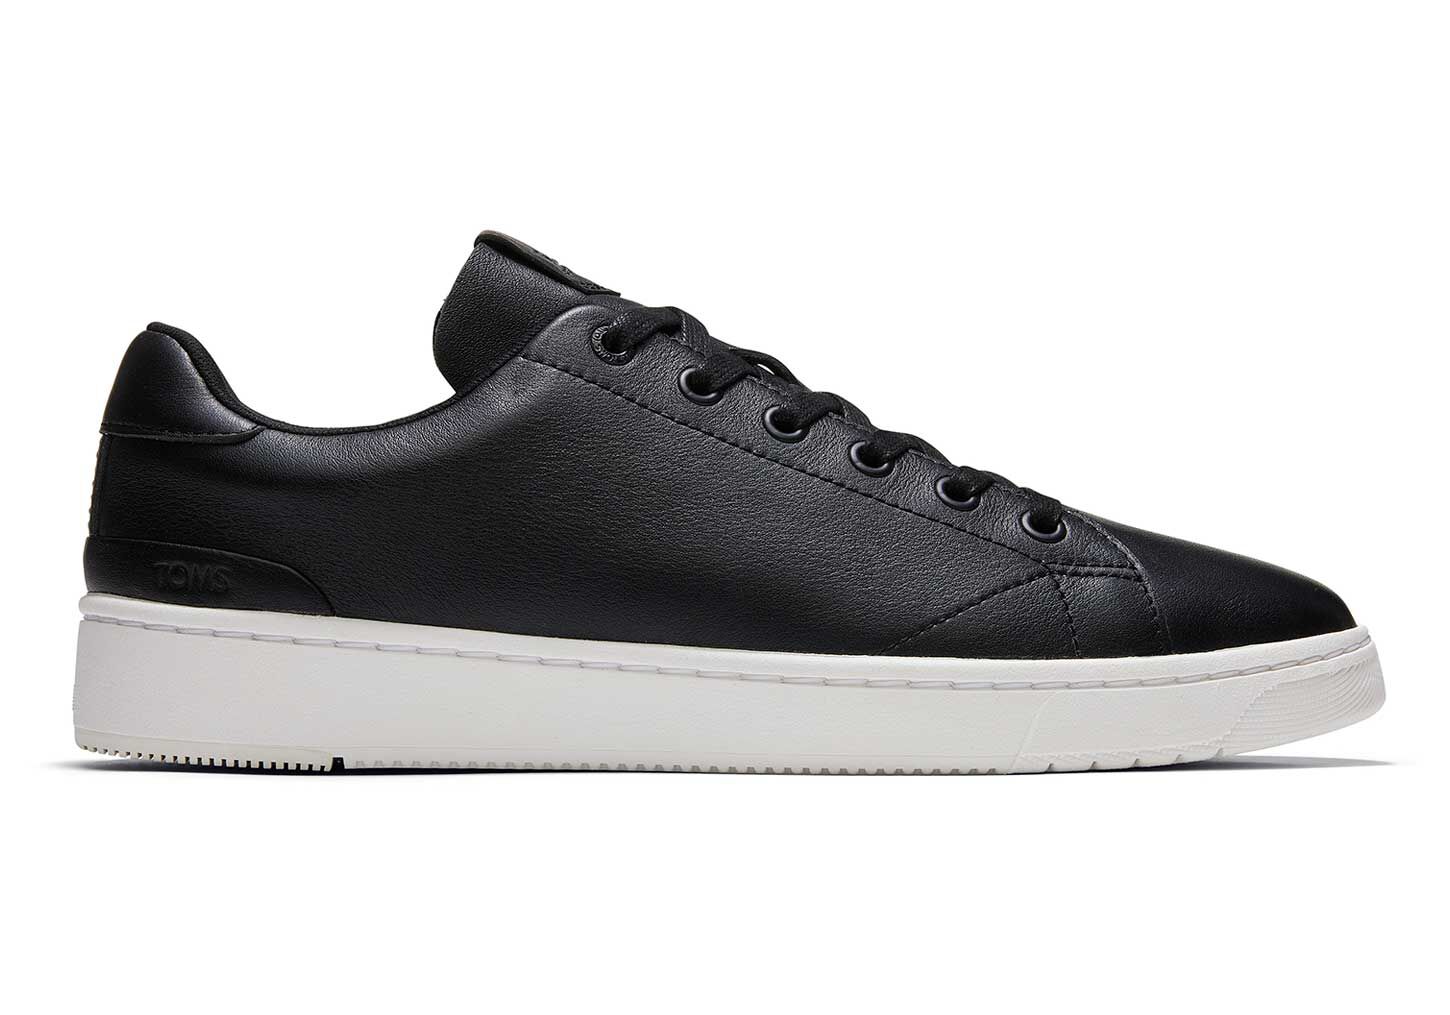 Buy Aldo Men AVEO004 Synthetic Sneakers Black at Amazon.in